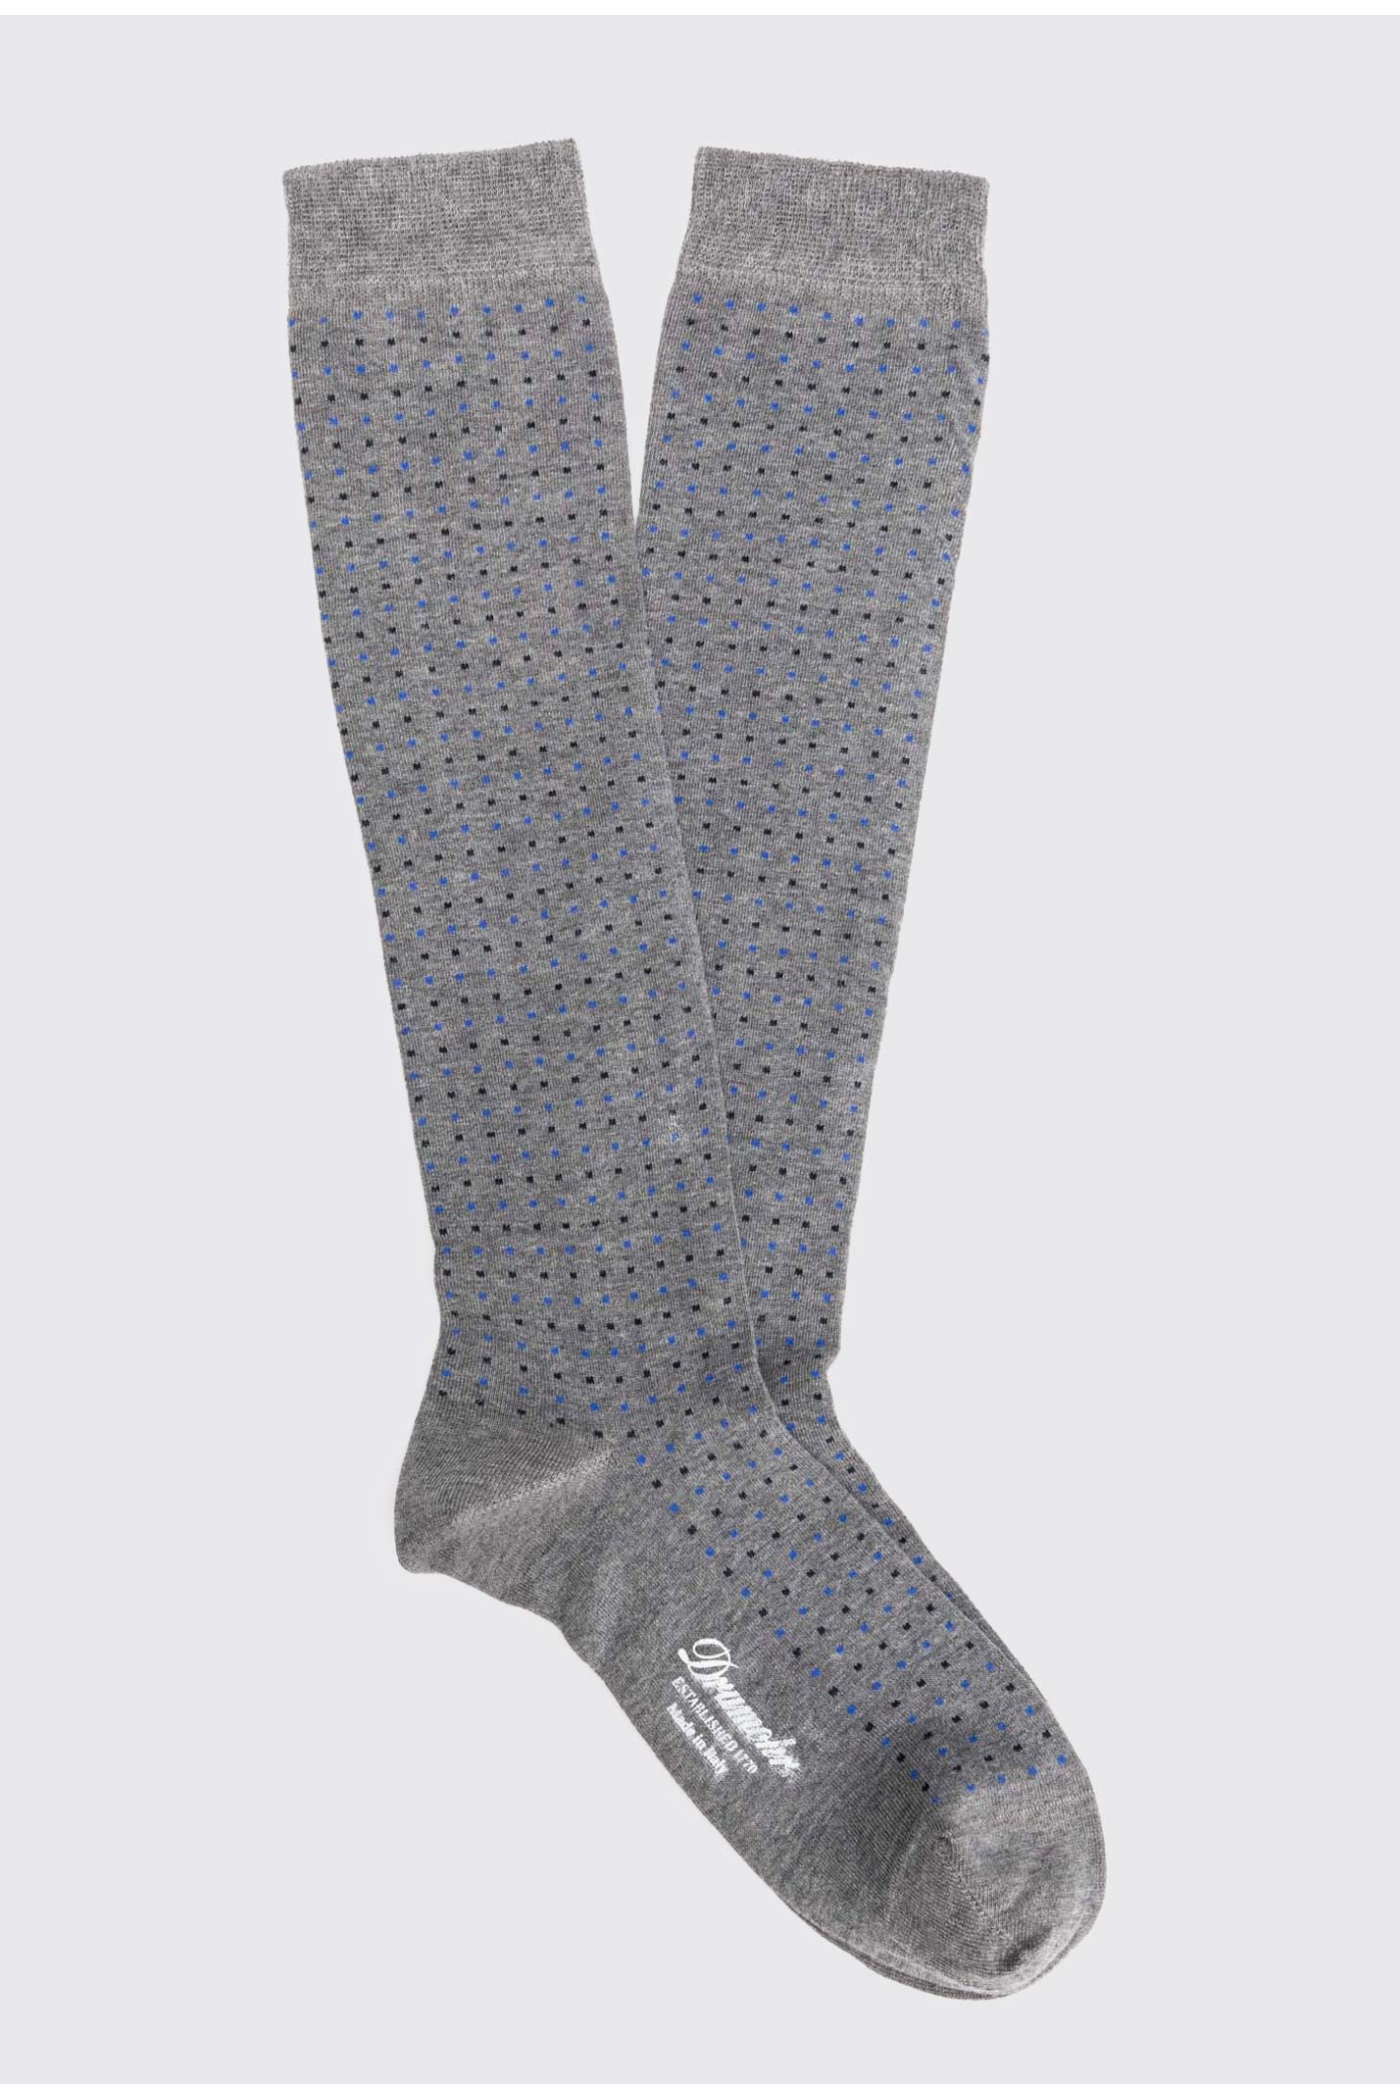 Cotton Patterned Socks